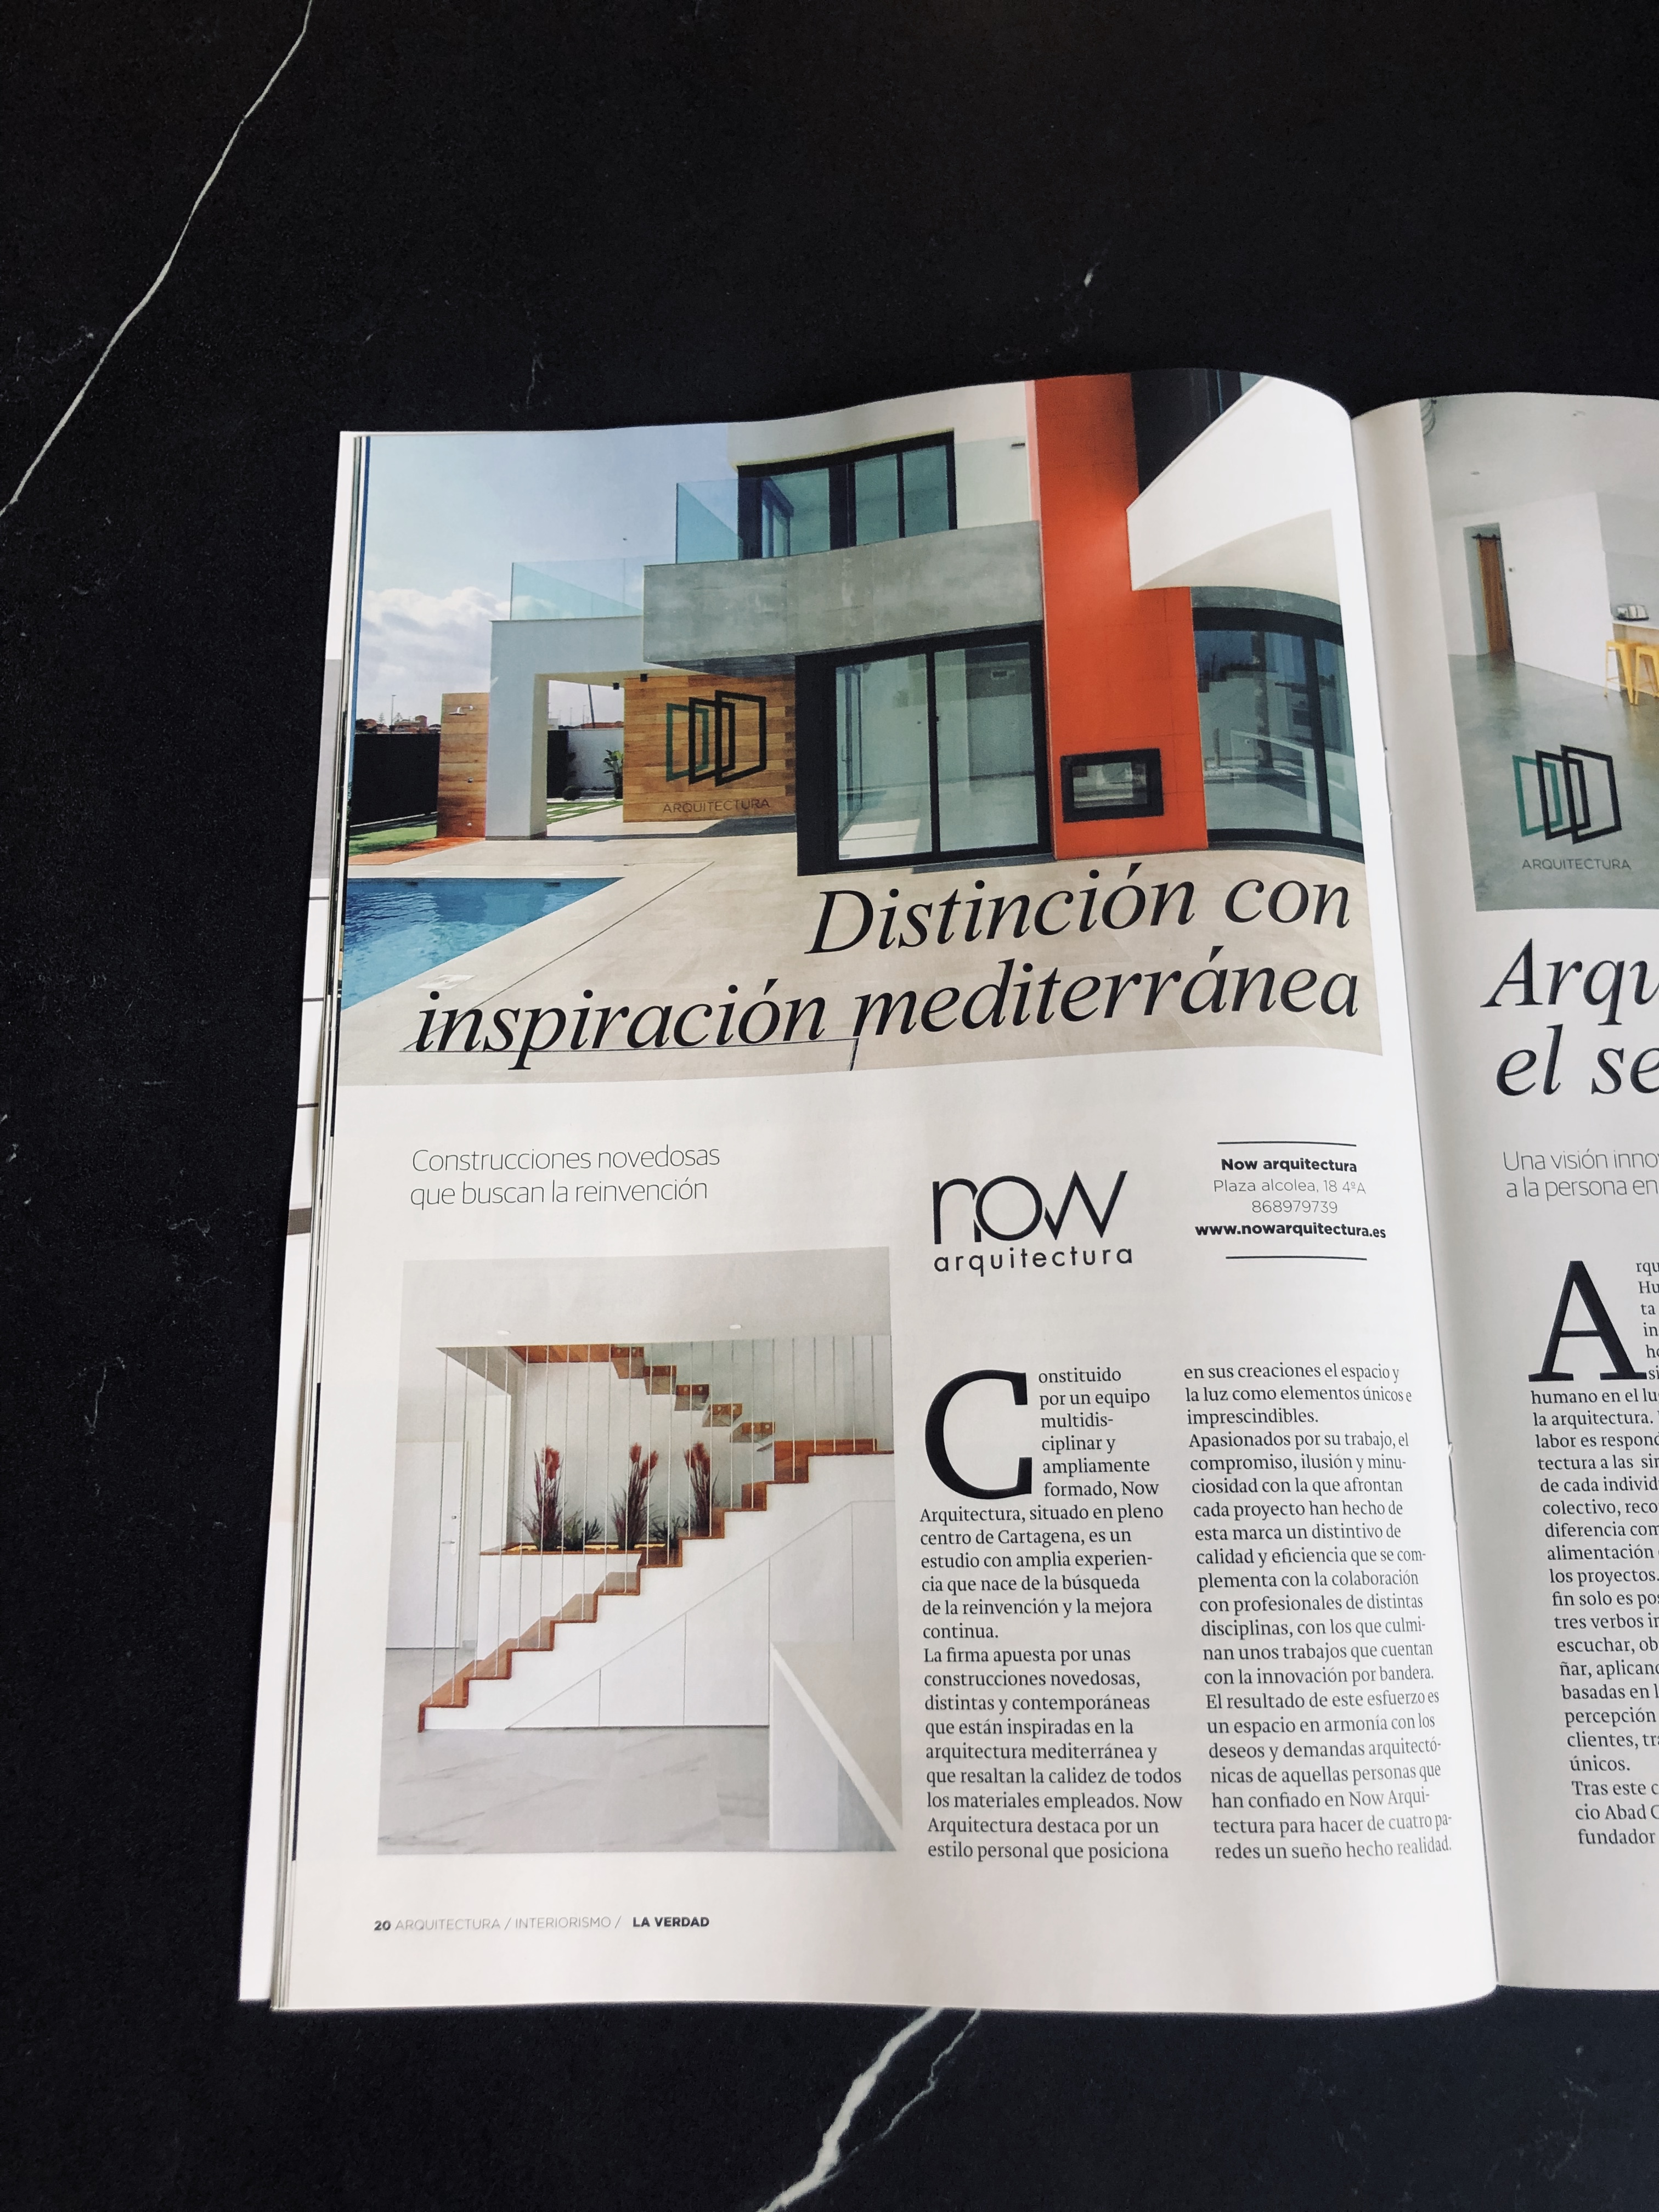 We are published in the autumn magazine “Arquitectura Interiorismo” of the newspaper “La Verdad”